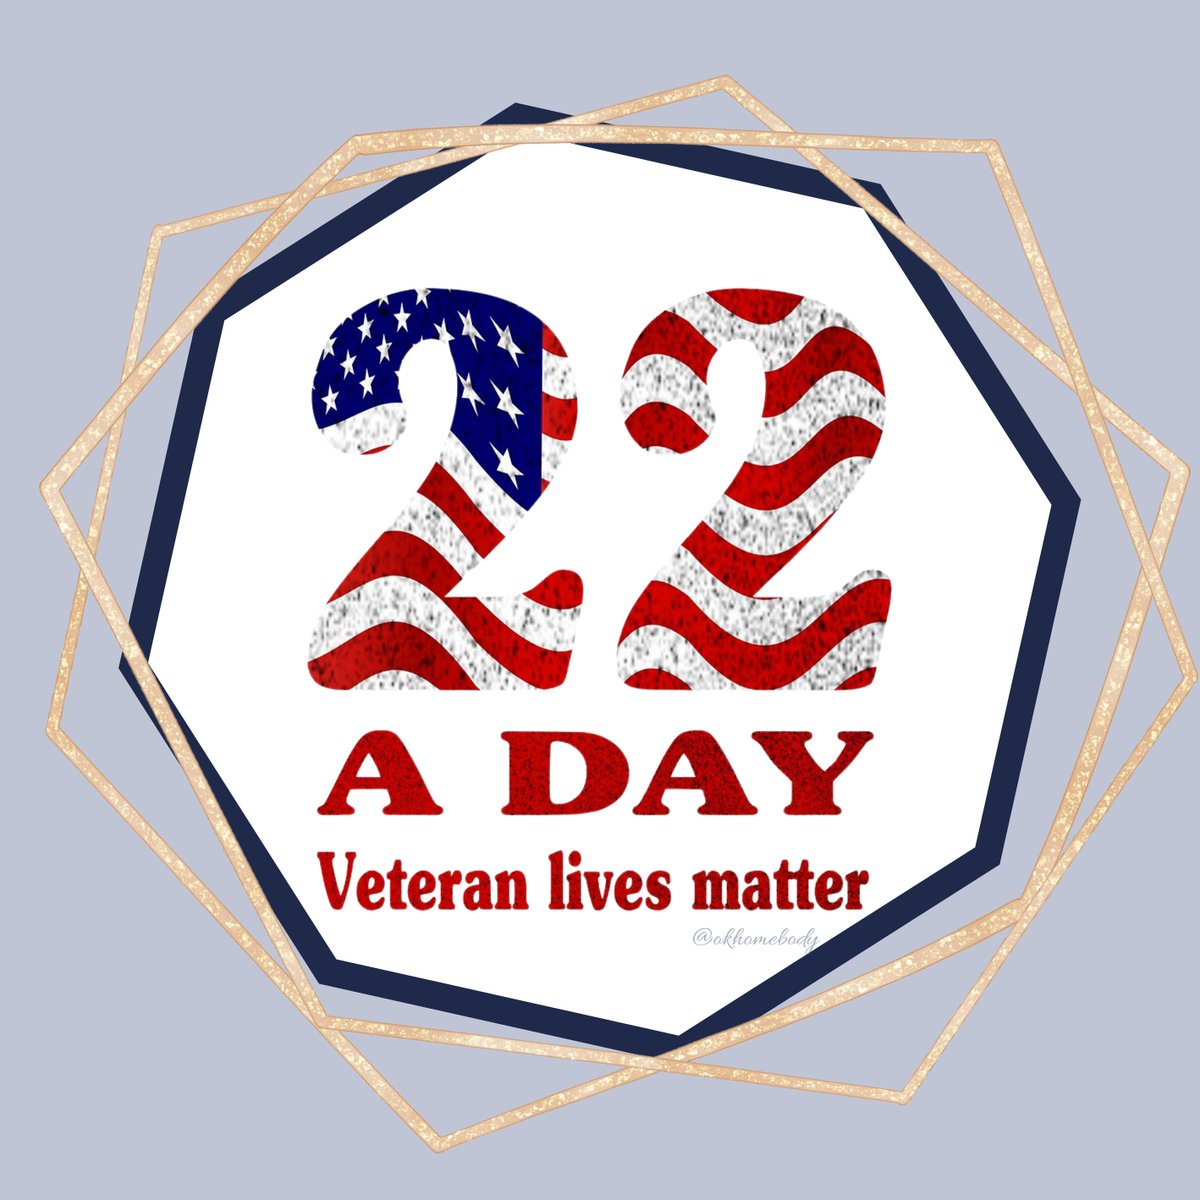 🇺🇸 #Mission22Monday #Buddy✅with #Veterans 🙏RH #EndVeteranSuicide #988press1 🇺🇸 🇺🇸 #BuddyChecksMatterMoreIn2024 🇺🇸 🇺🇸 🇺🇸 @NelisonDarin @RogerMcghee6 @JamesBuckl3779⭐️ 🇺🇸 @srasberry1 @MAC_ARMY1 @vmmtn⭐️ 🇺🇸 @army_abn3rdTime @Tacoma1776 ⭐️ 🇺🇸 @jims7493 @paul_merre1945 @DJC2814 ⭐️